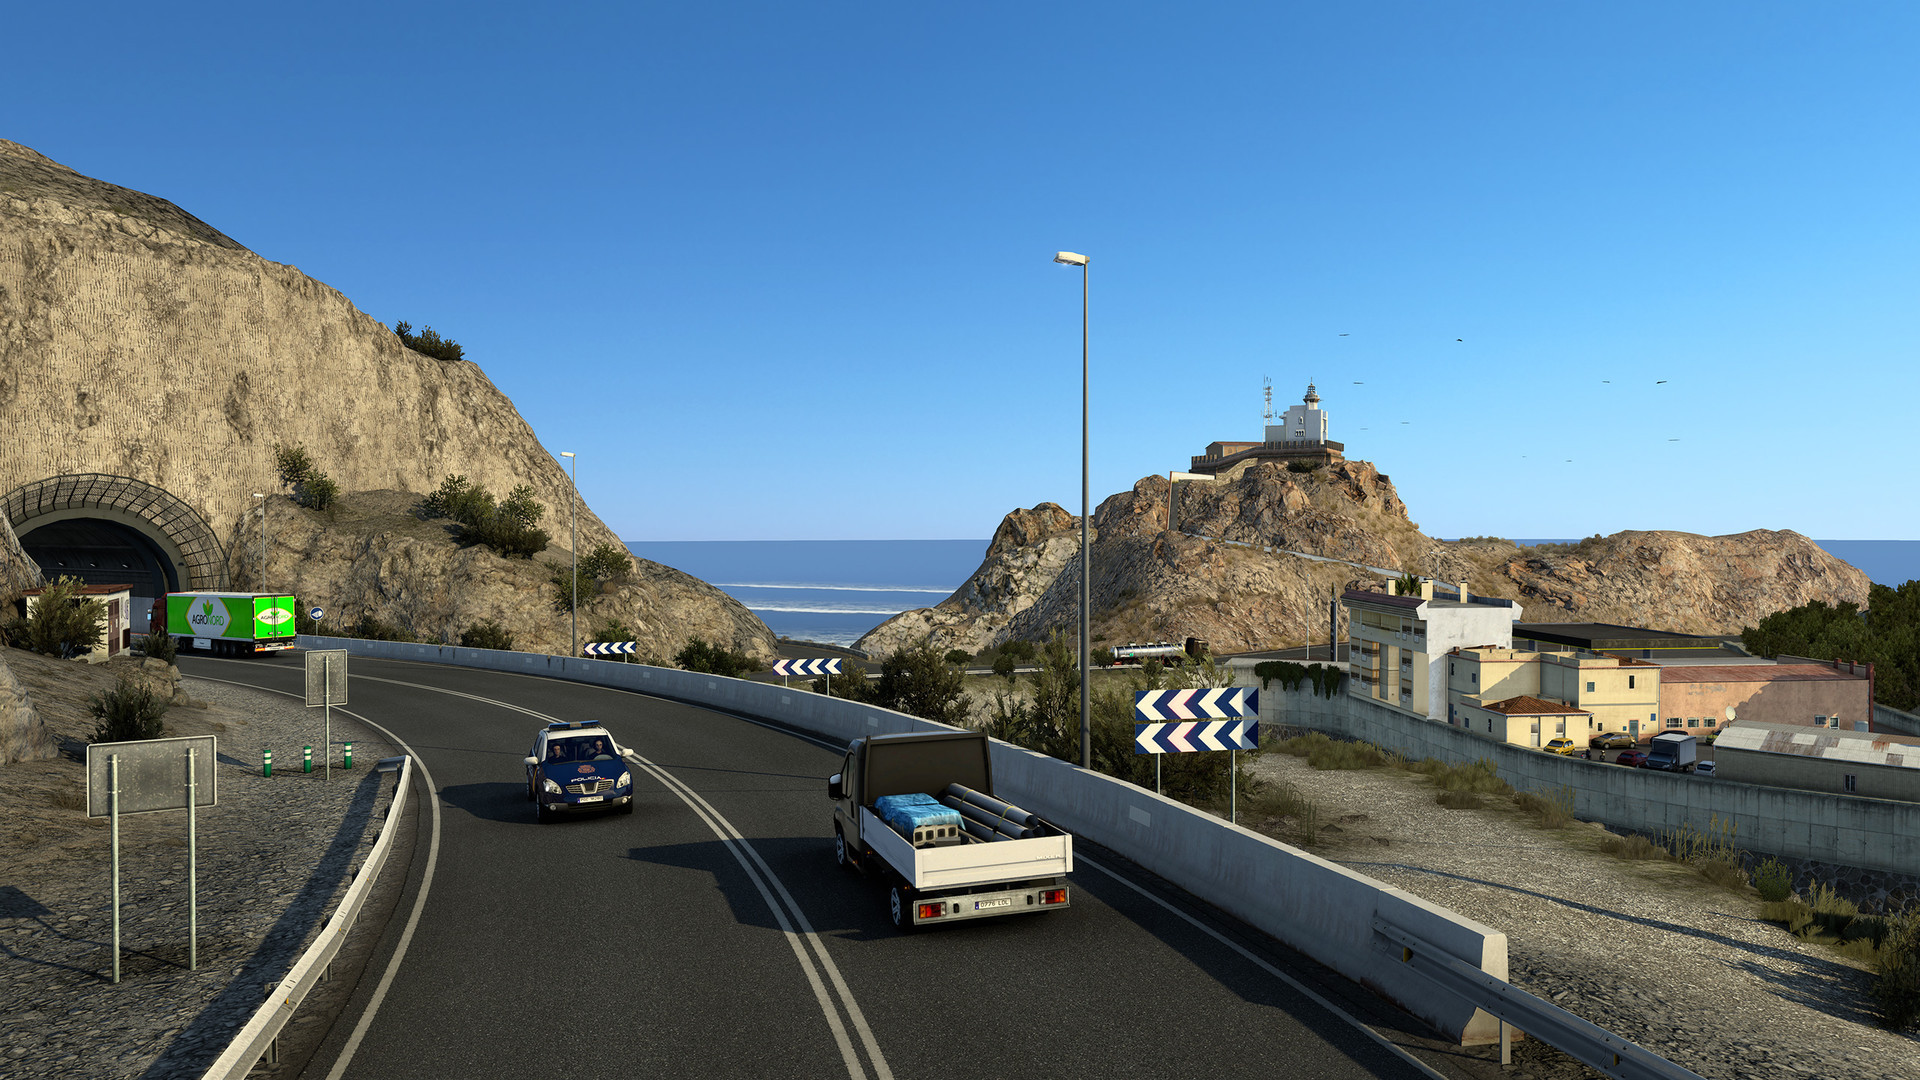 Jogo para PC Euro Truck Simulator 2 Iberia PC